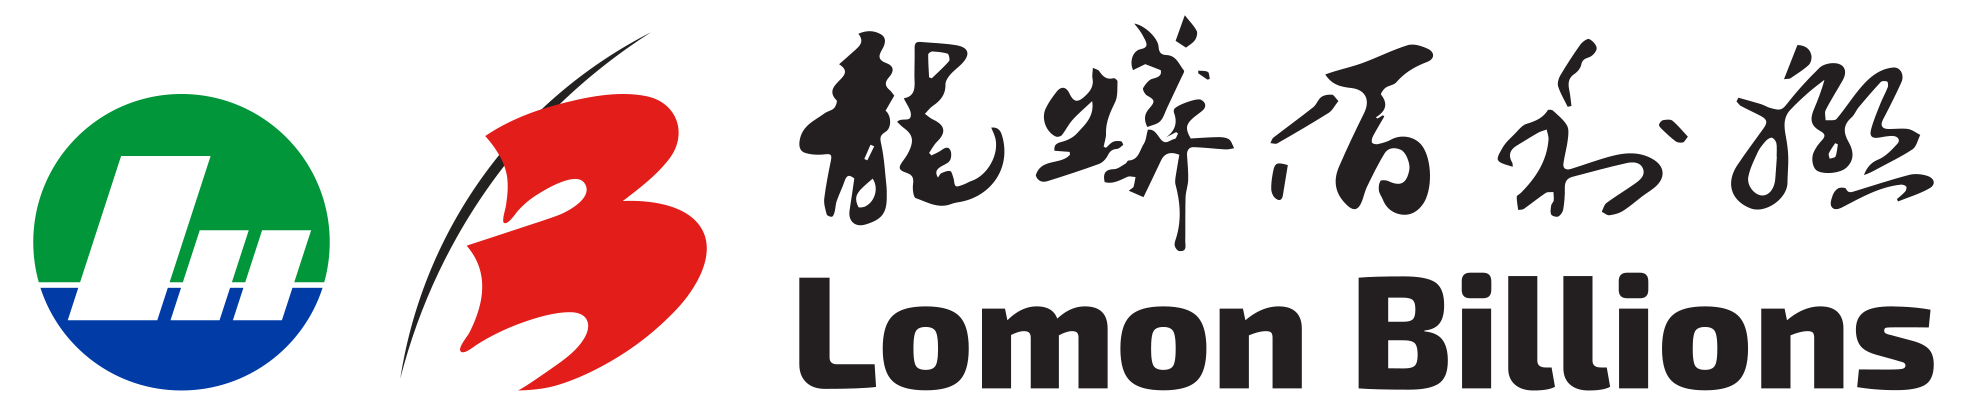 Lomon Billions Group Co., Ltd._logo